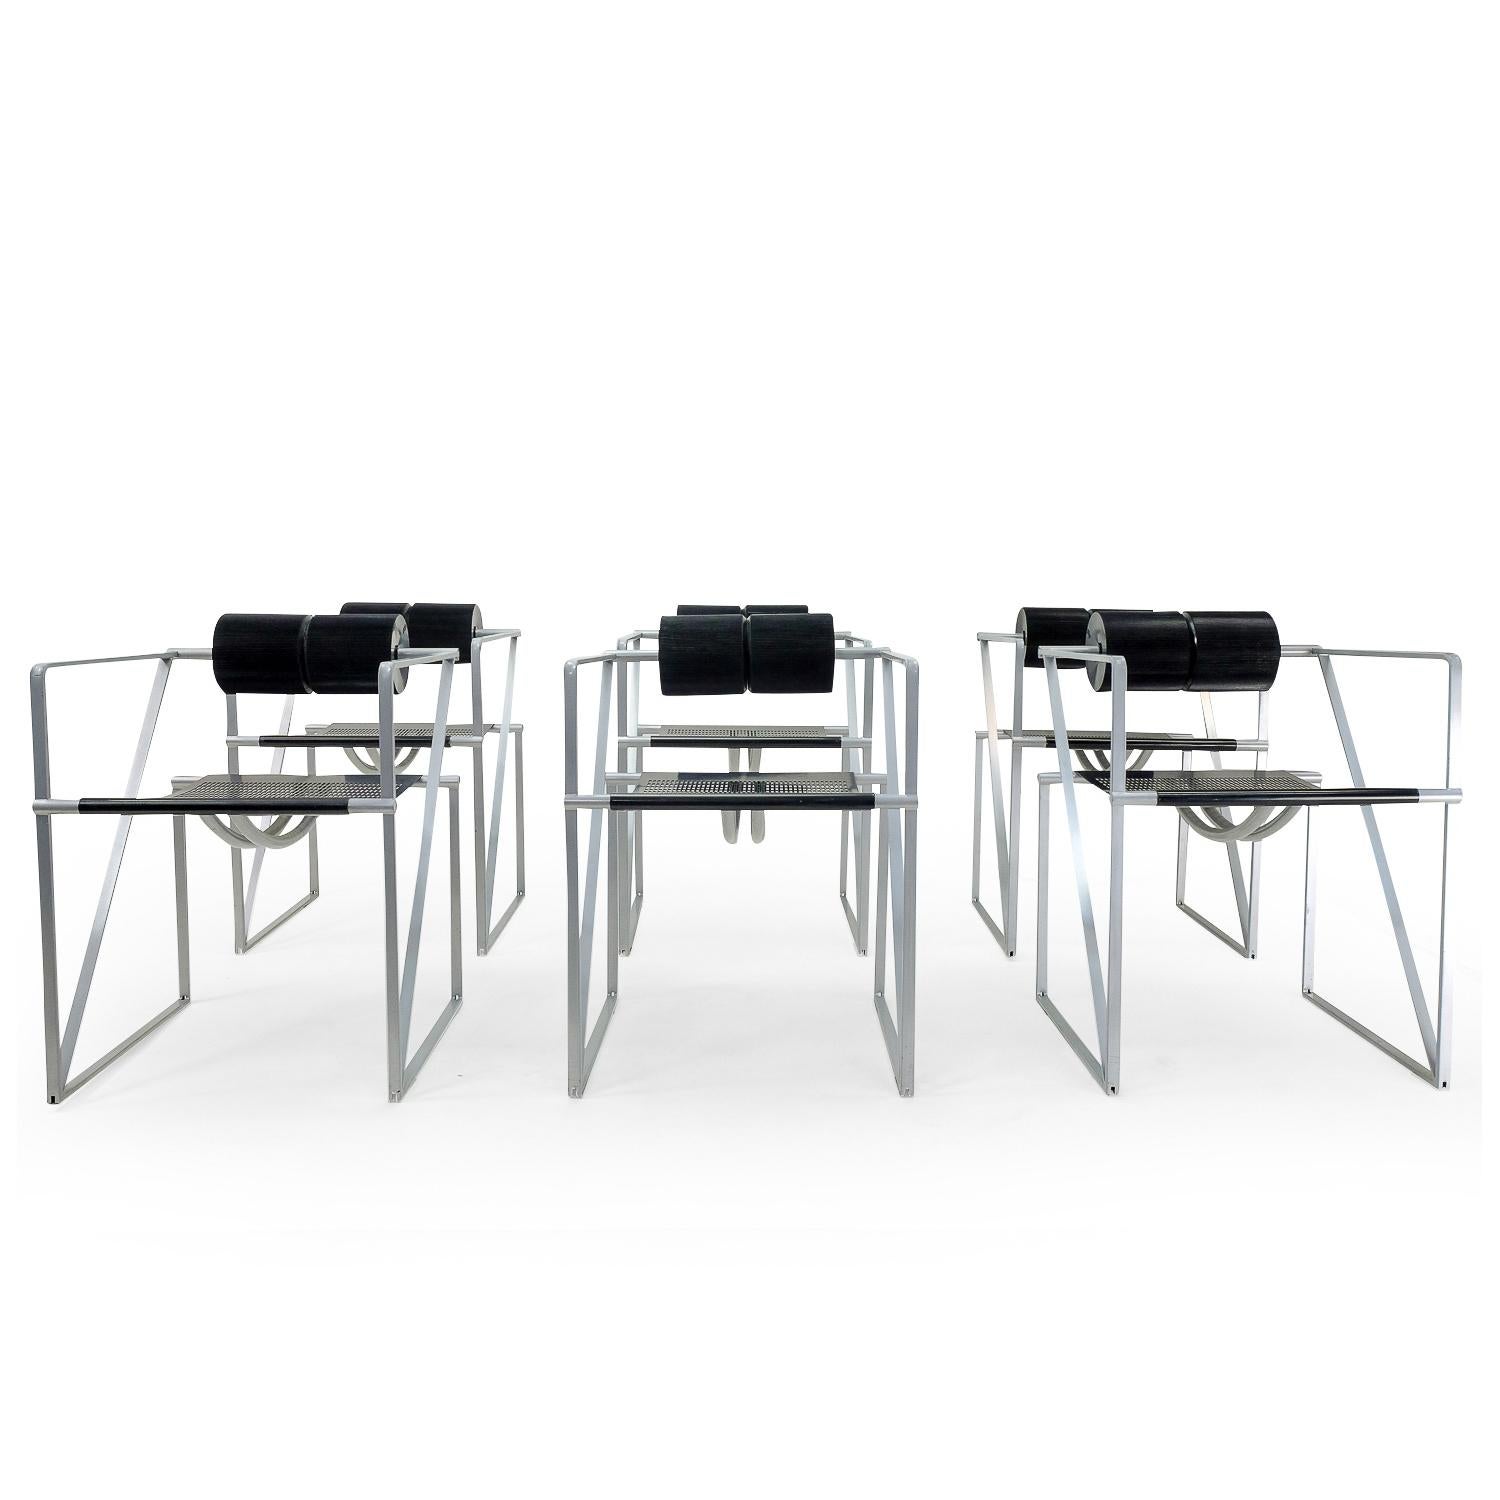 Post Modern Swiss Design Seconda Chairs by Mario Botta for Alias, 1980s 1